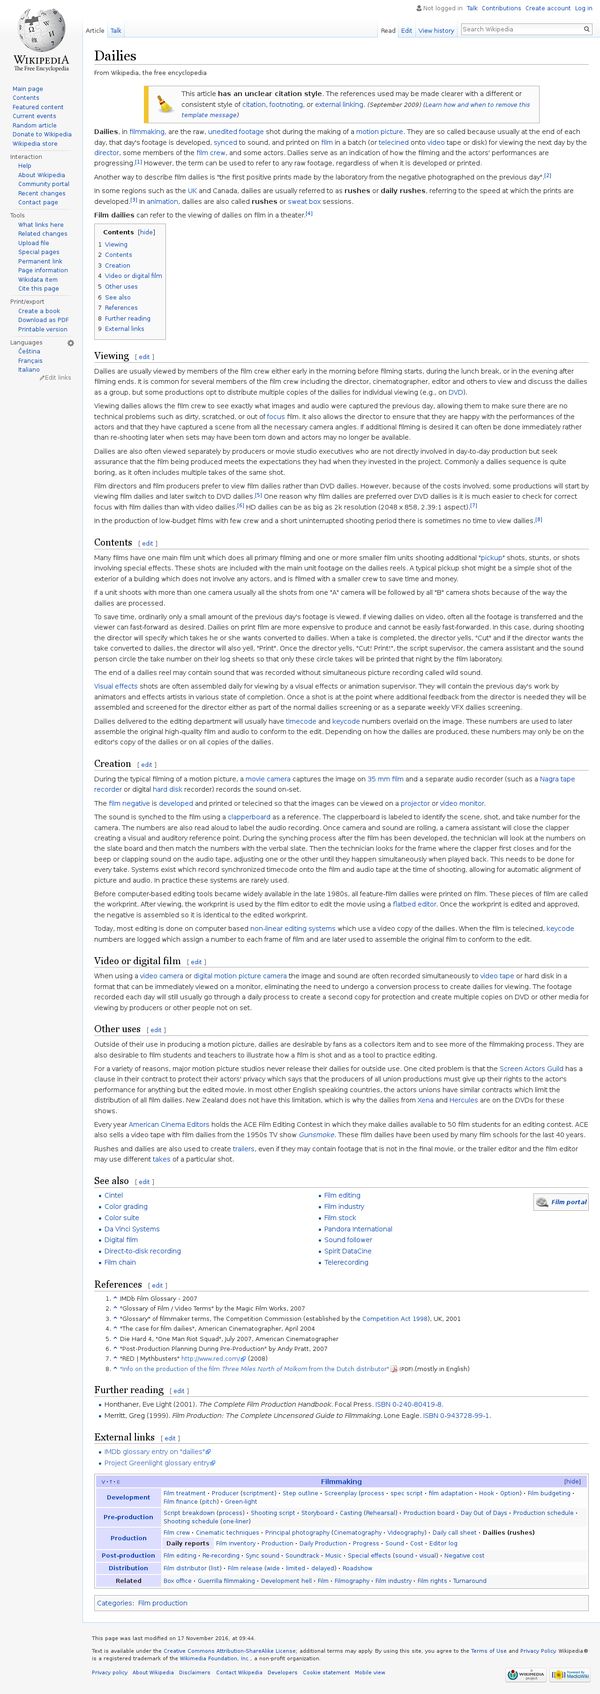 Dailies - Wikipedia, the free encyclopedia